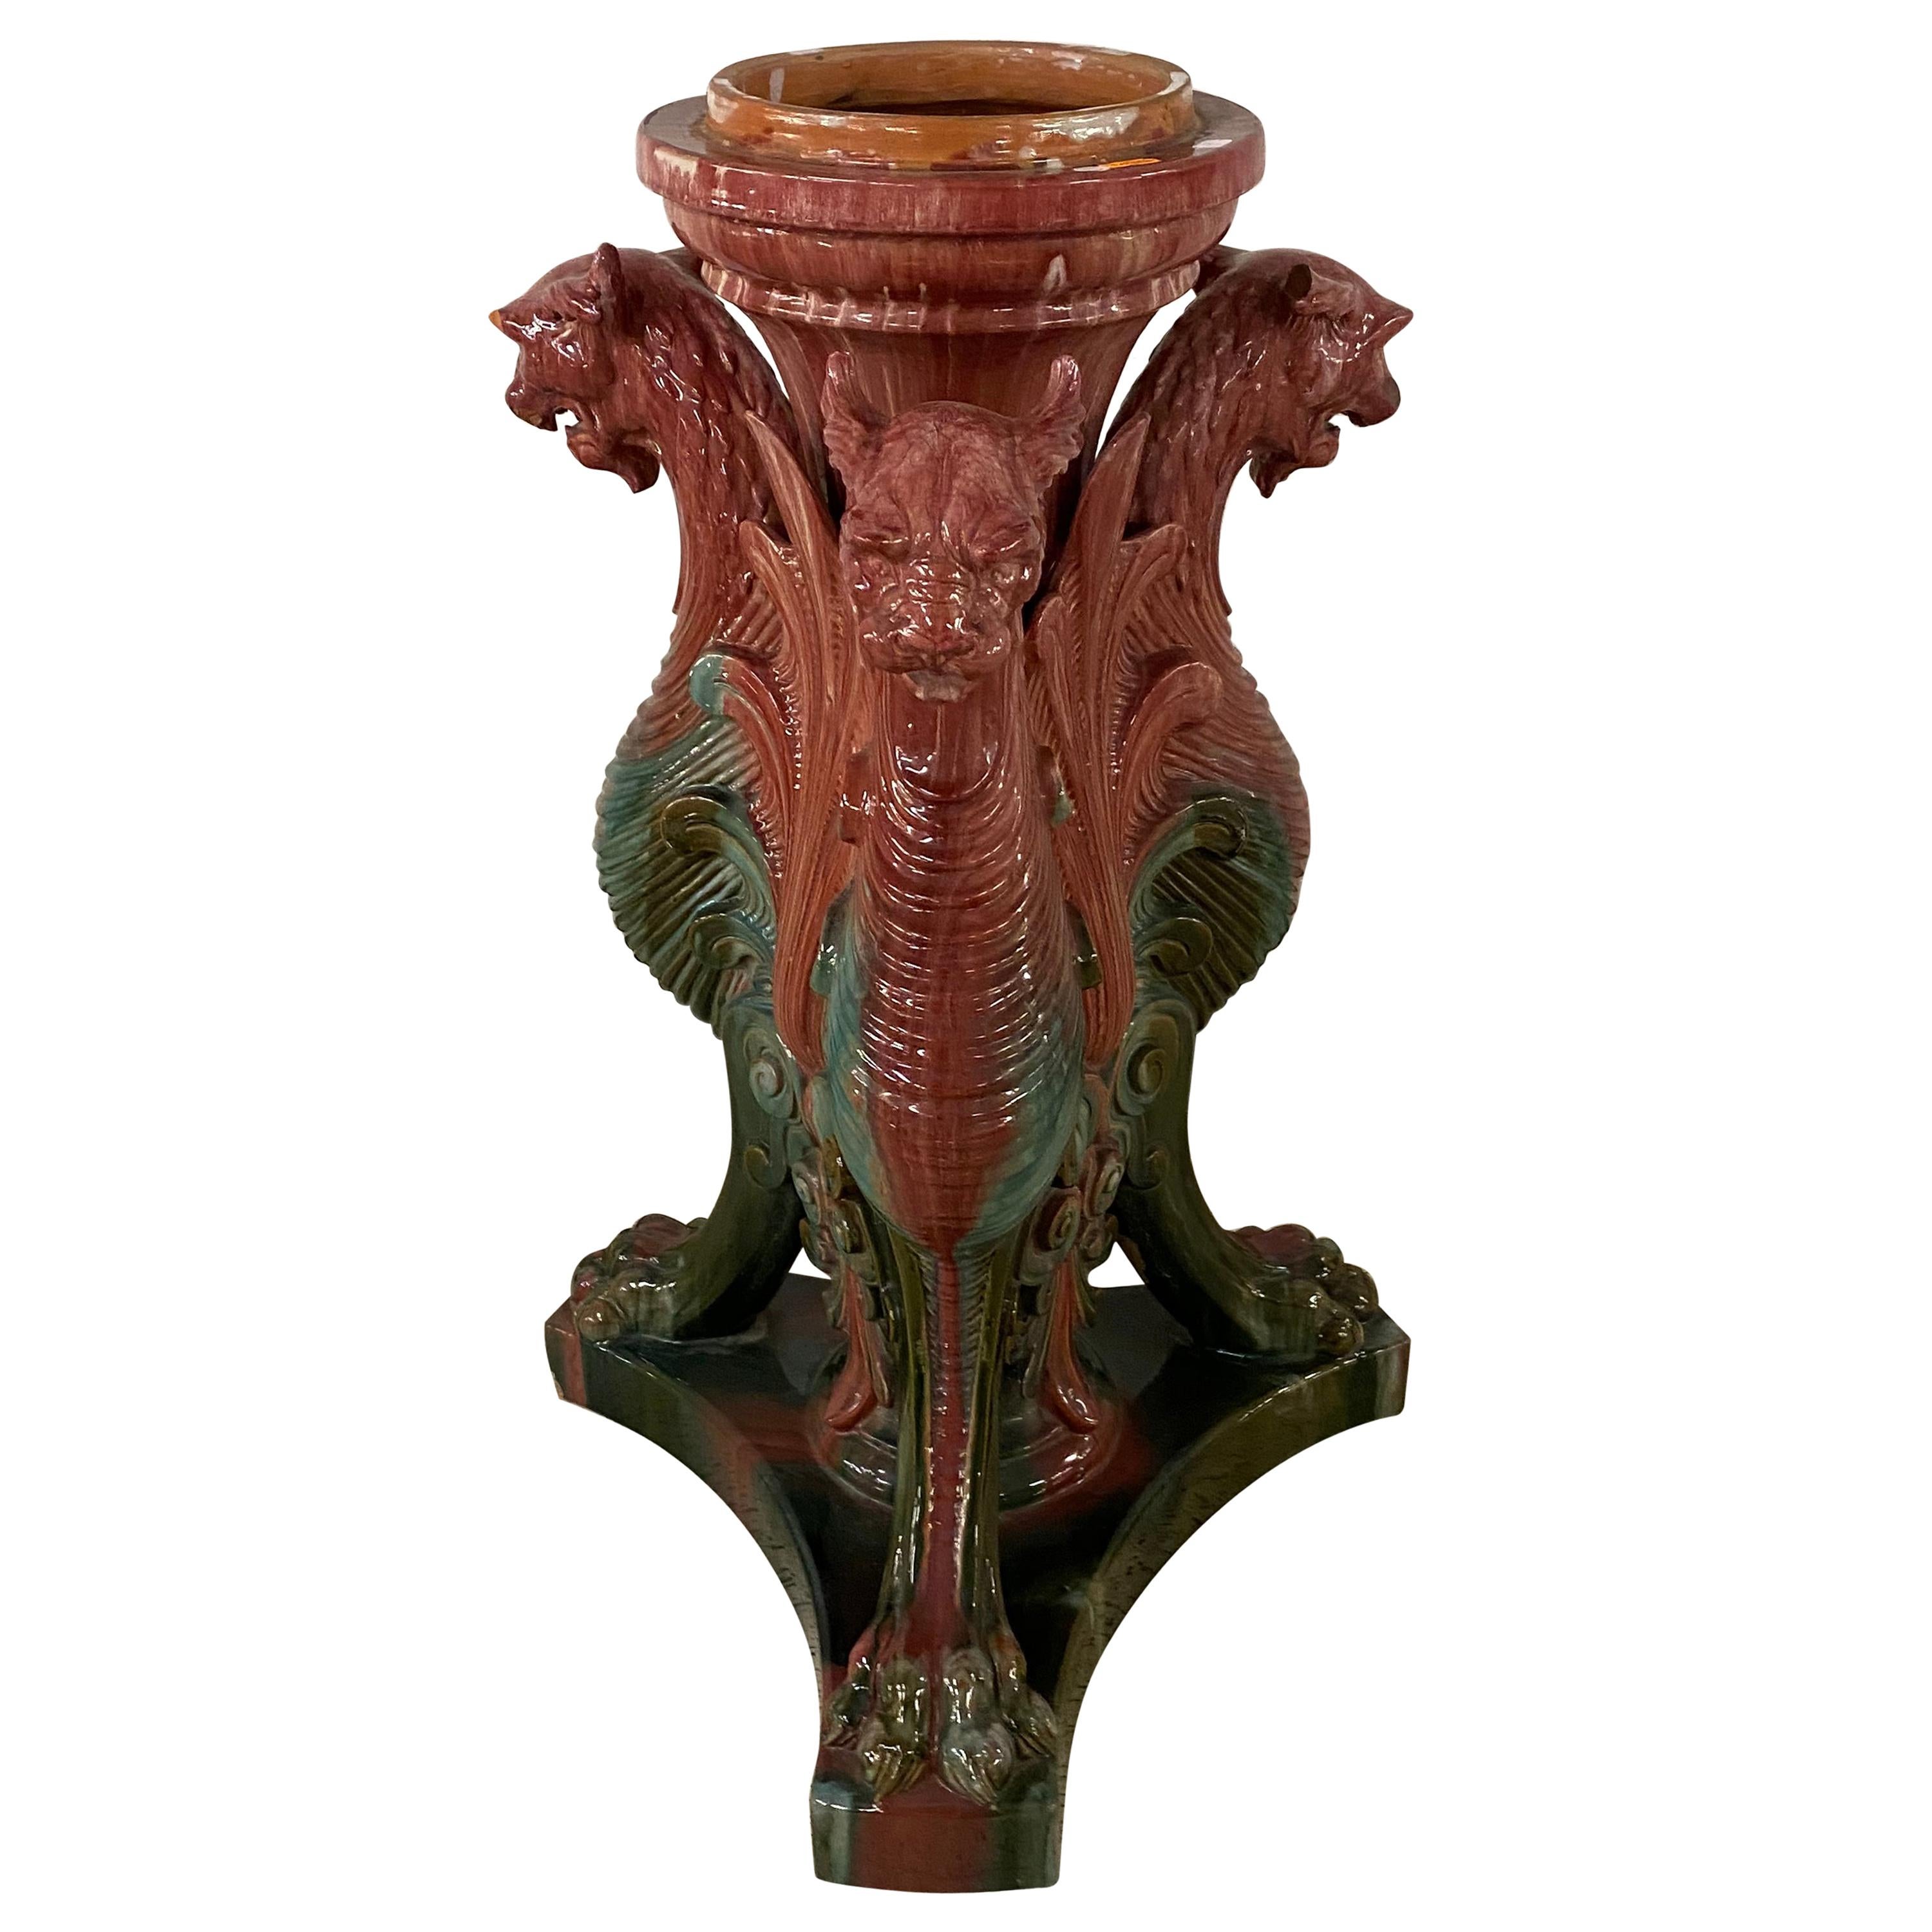 Vallauris, Art Nouveau Pedestal in Ceramic, circa 1900